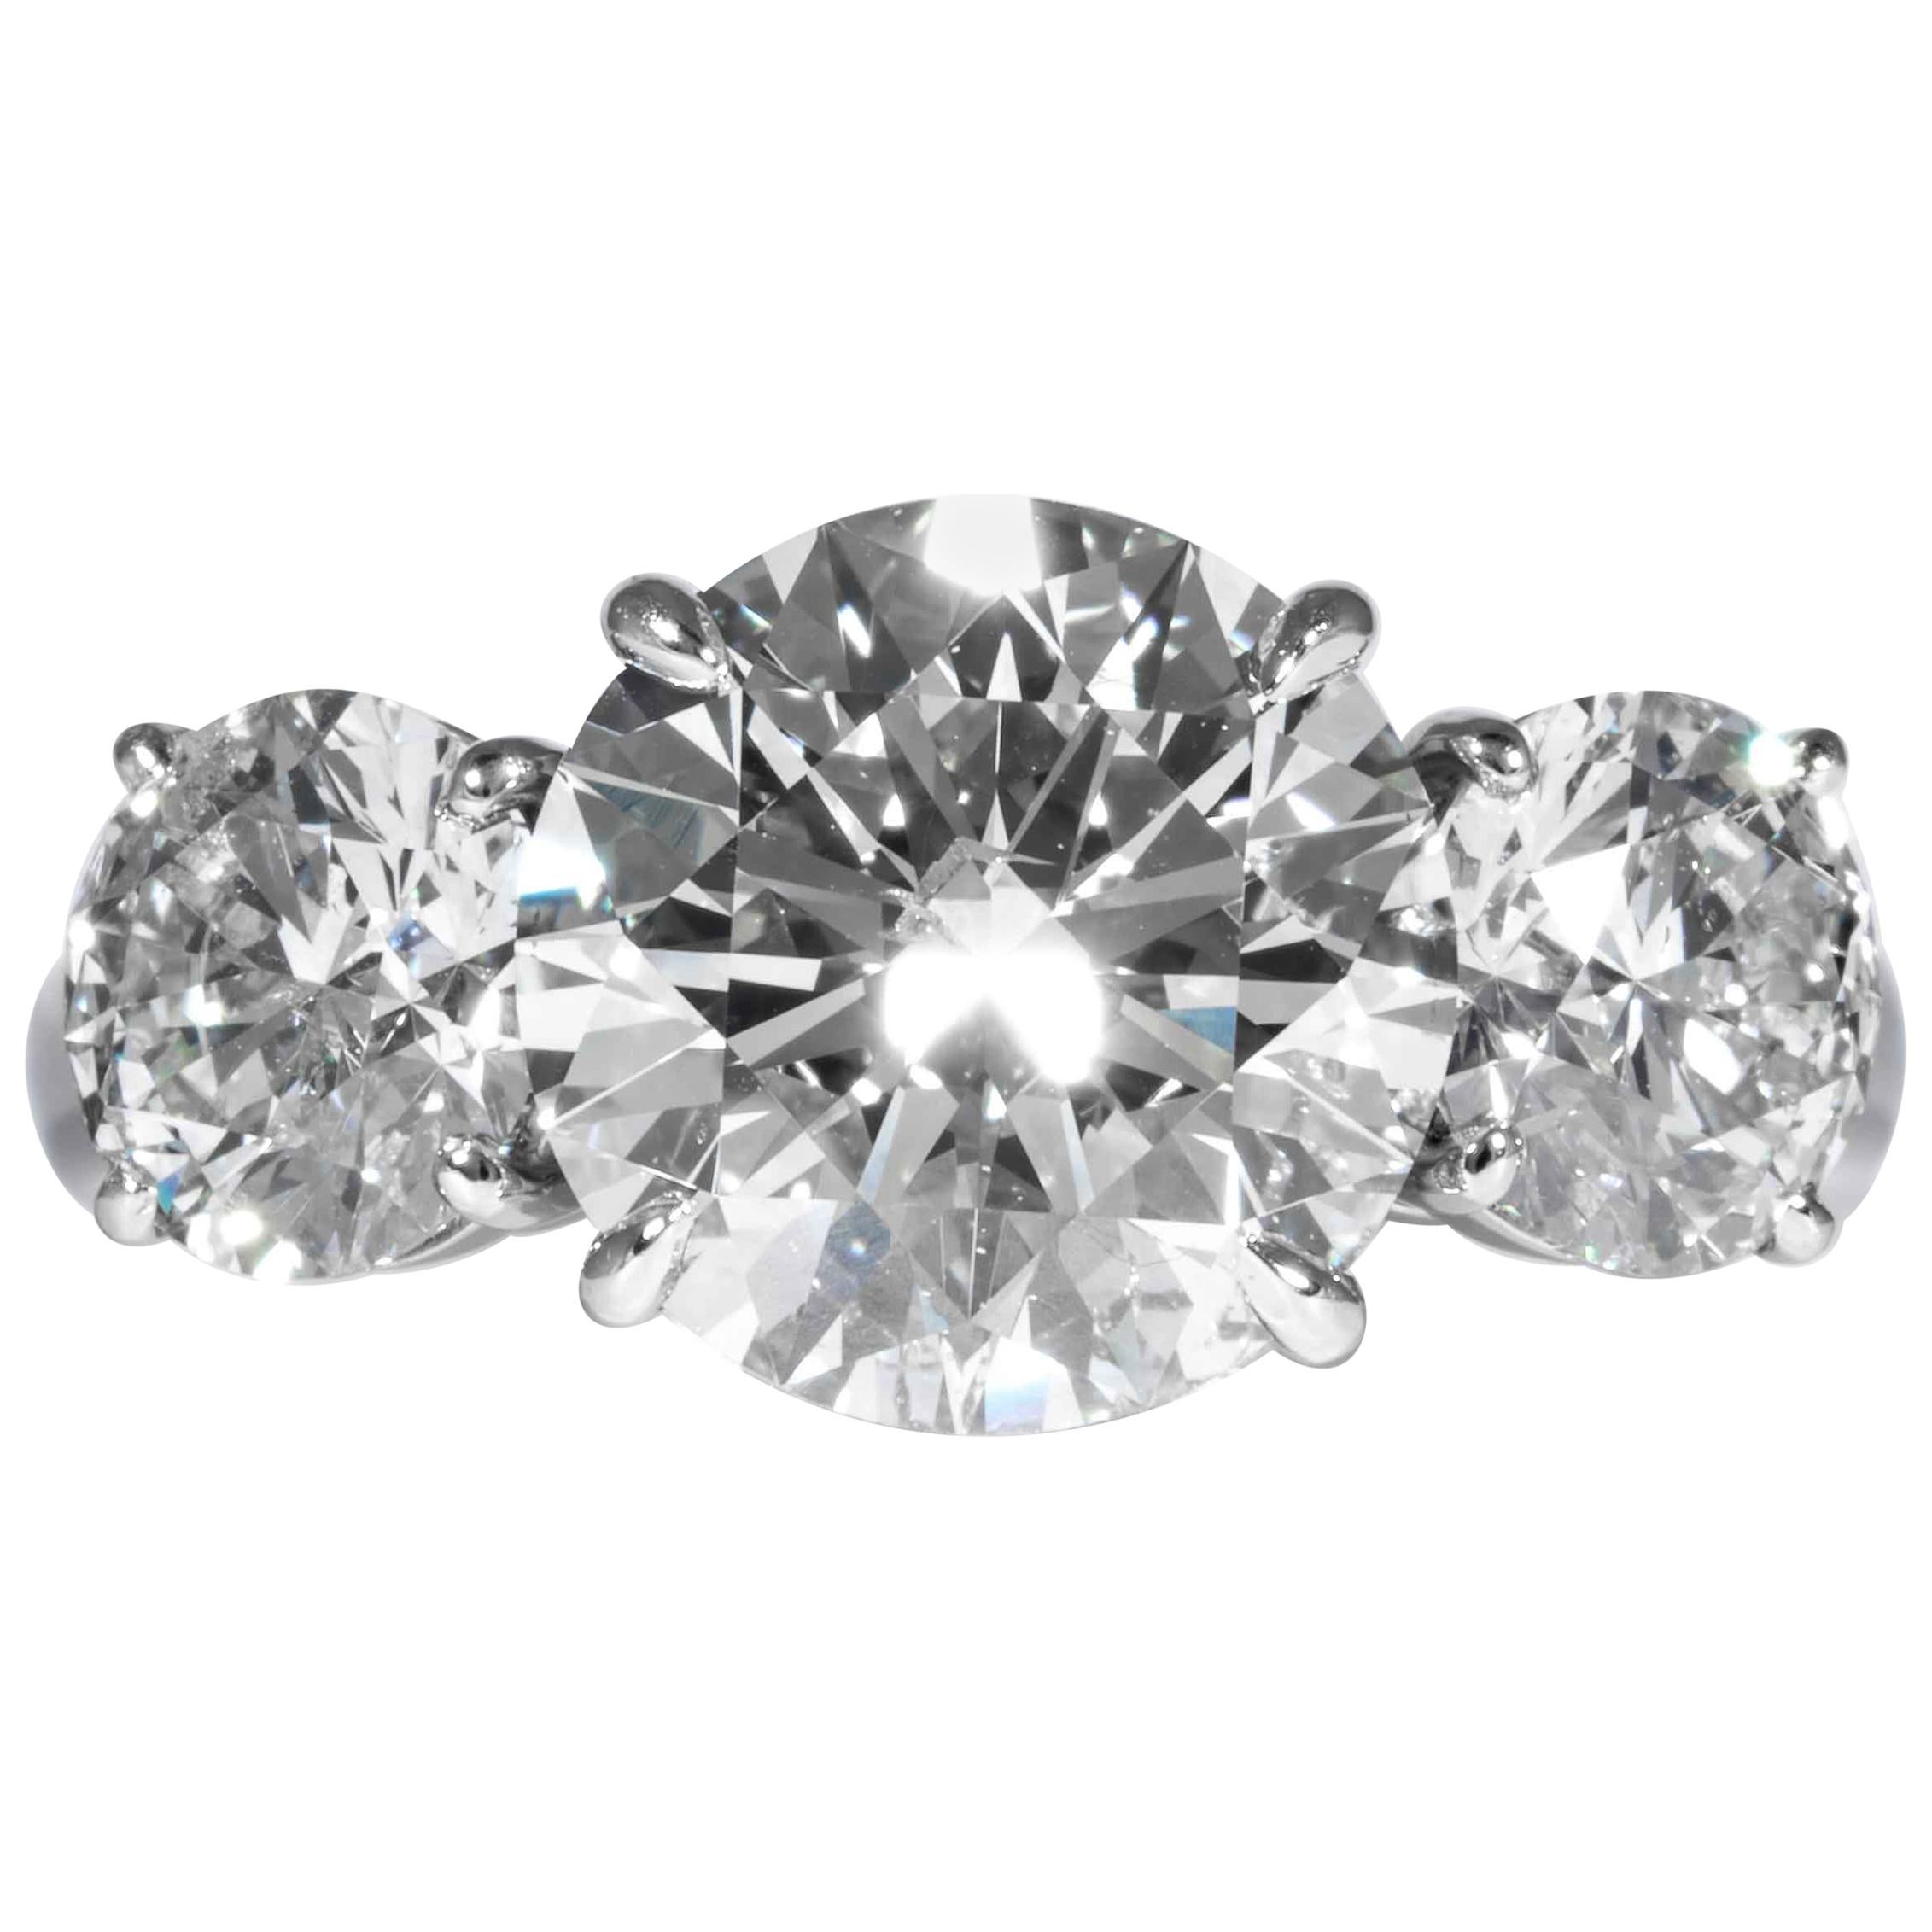 Shreve, Crump & Low GIA Certified 3.99 Carat J SI2 Round Brilliant Diamond Ring